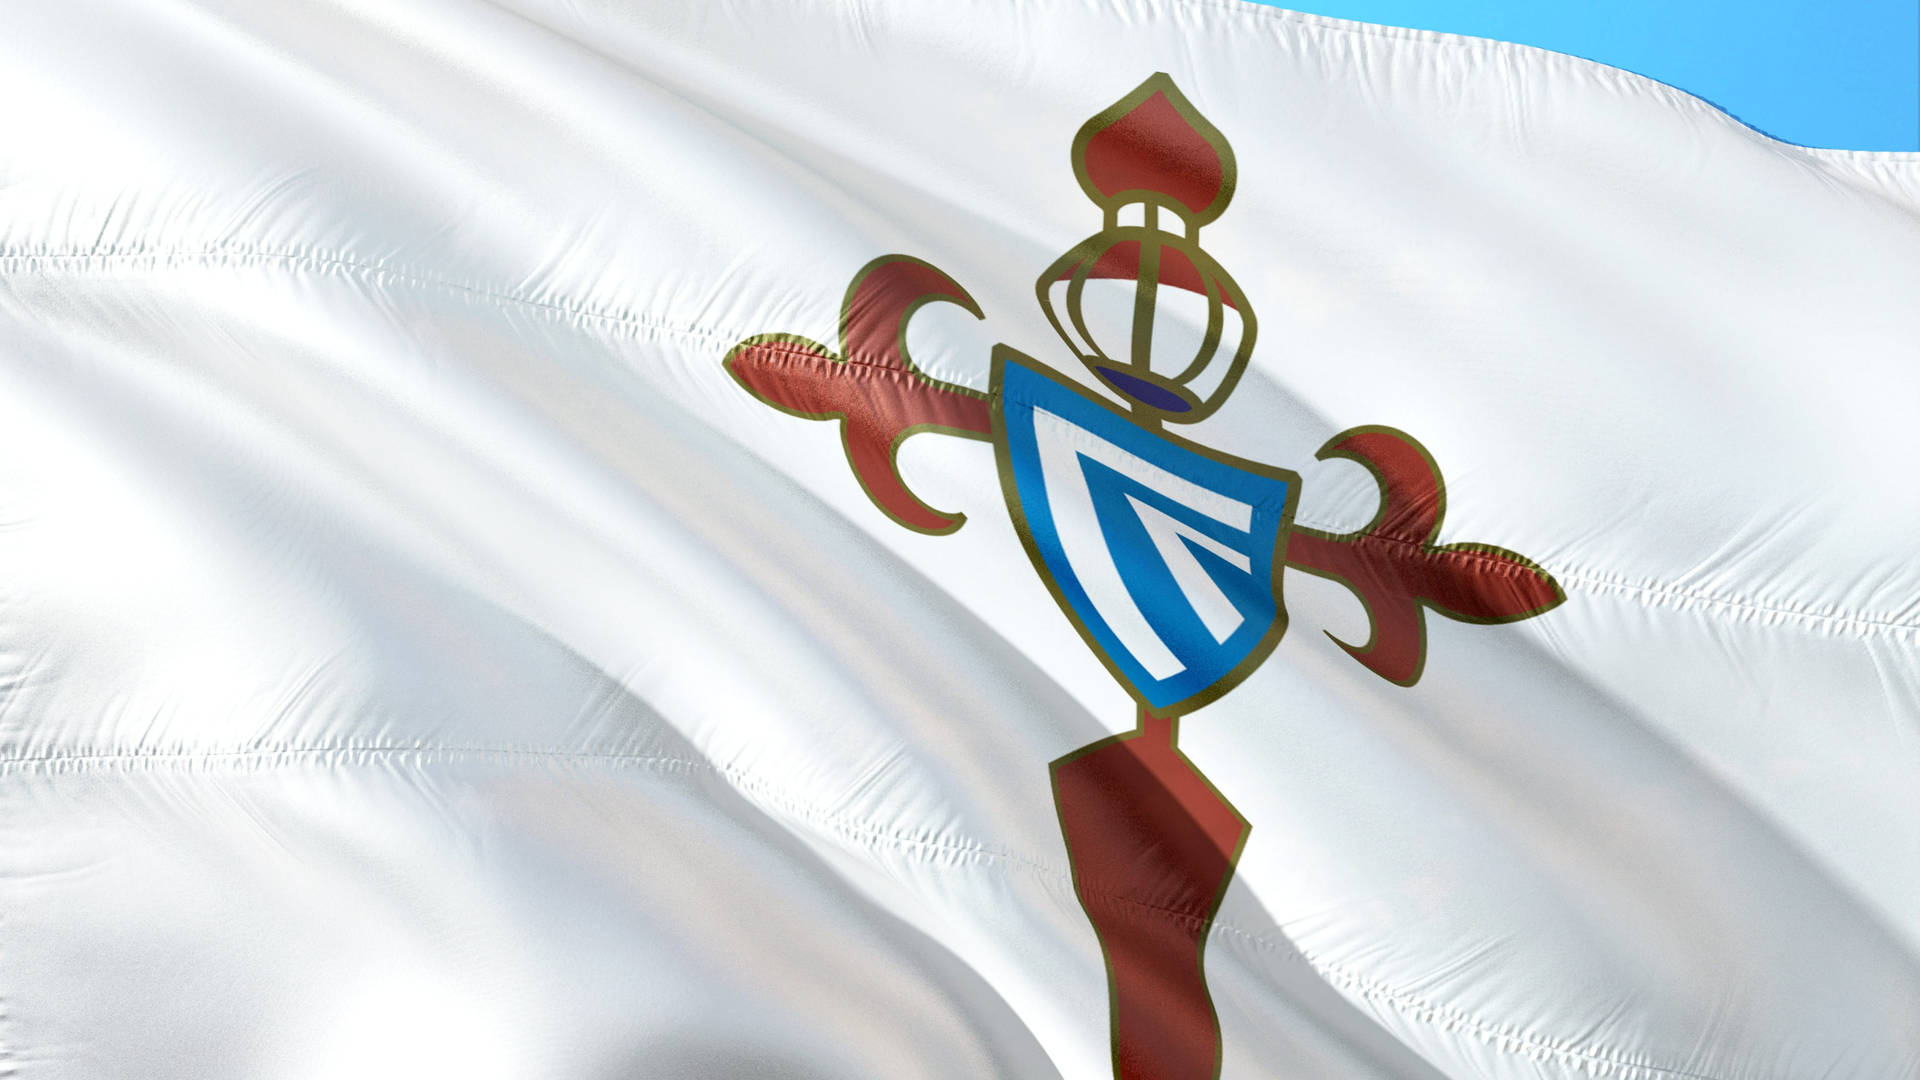 Dieflagge Von Celta De Vigo In Der La Liga. Wallpaper